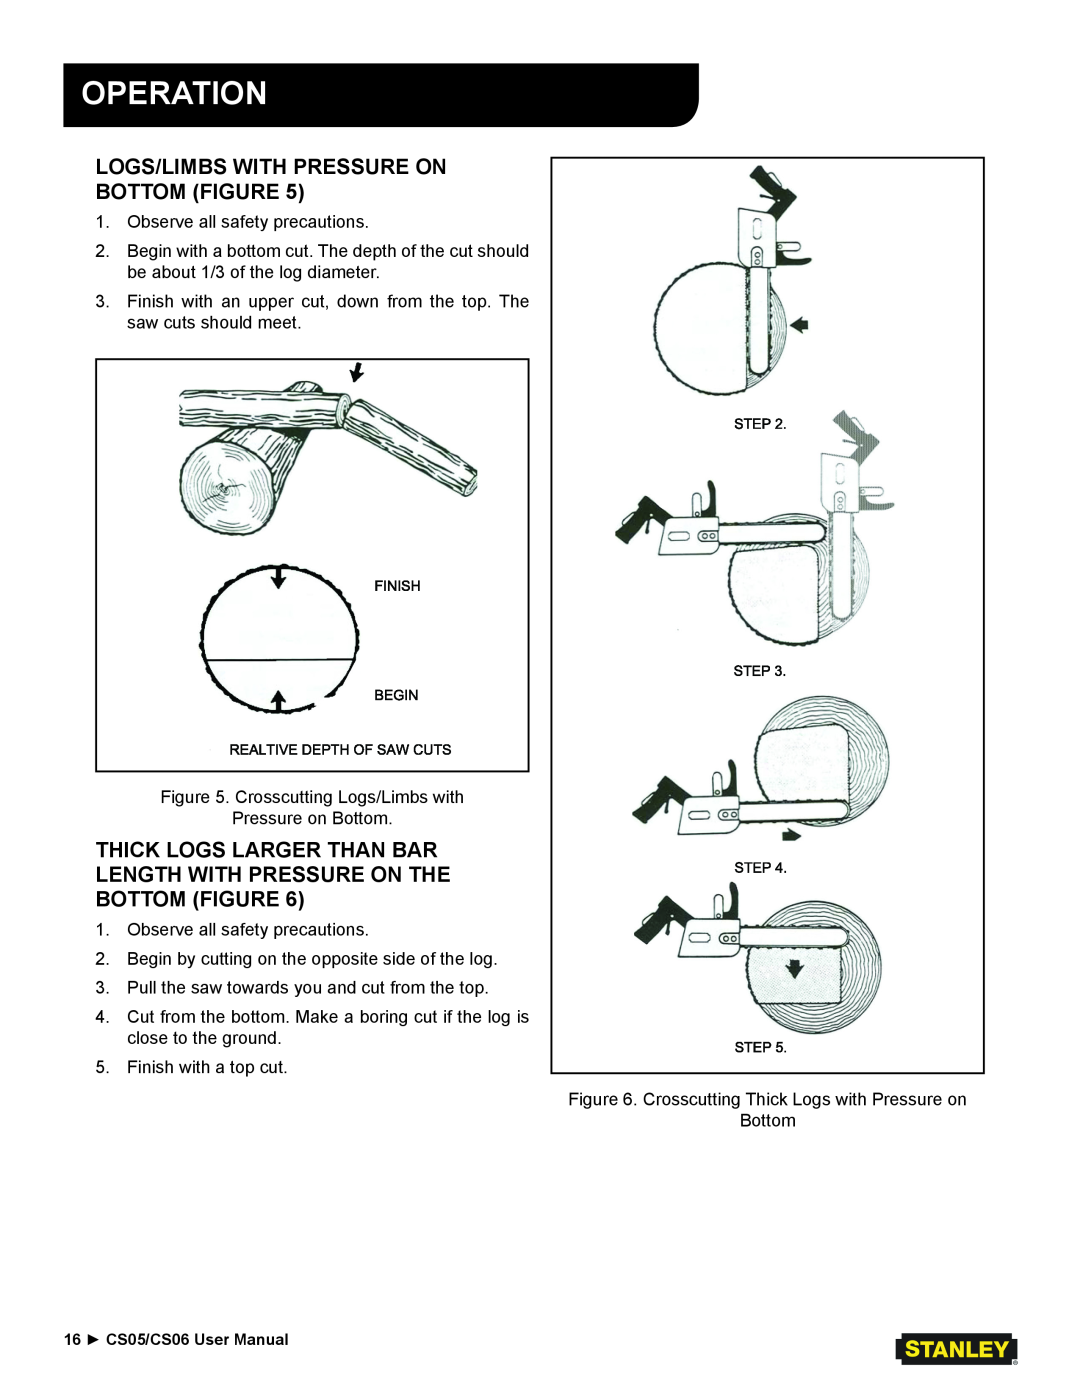 Stanley Black & Decker user manual Logs/Limbs With Pressure On Bottom Figure, Operation, 16 CS05/CS06 User Manual 